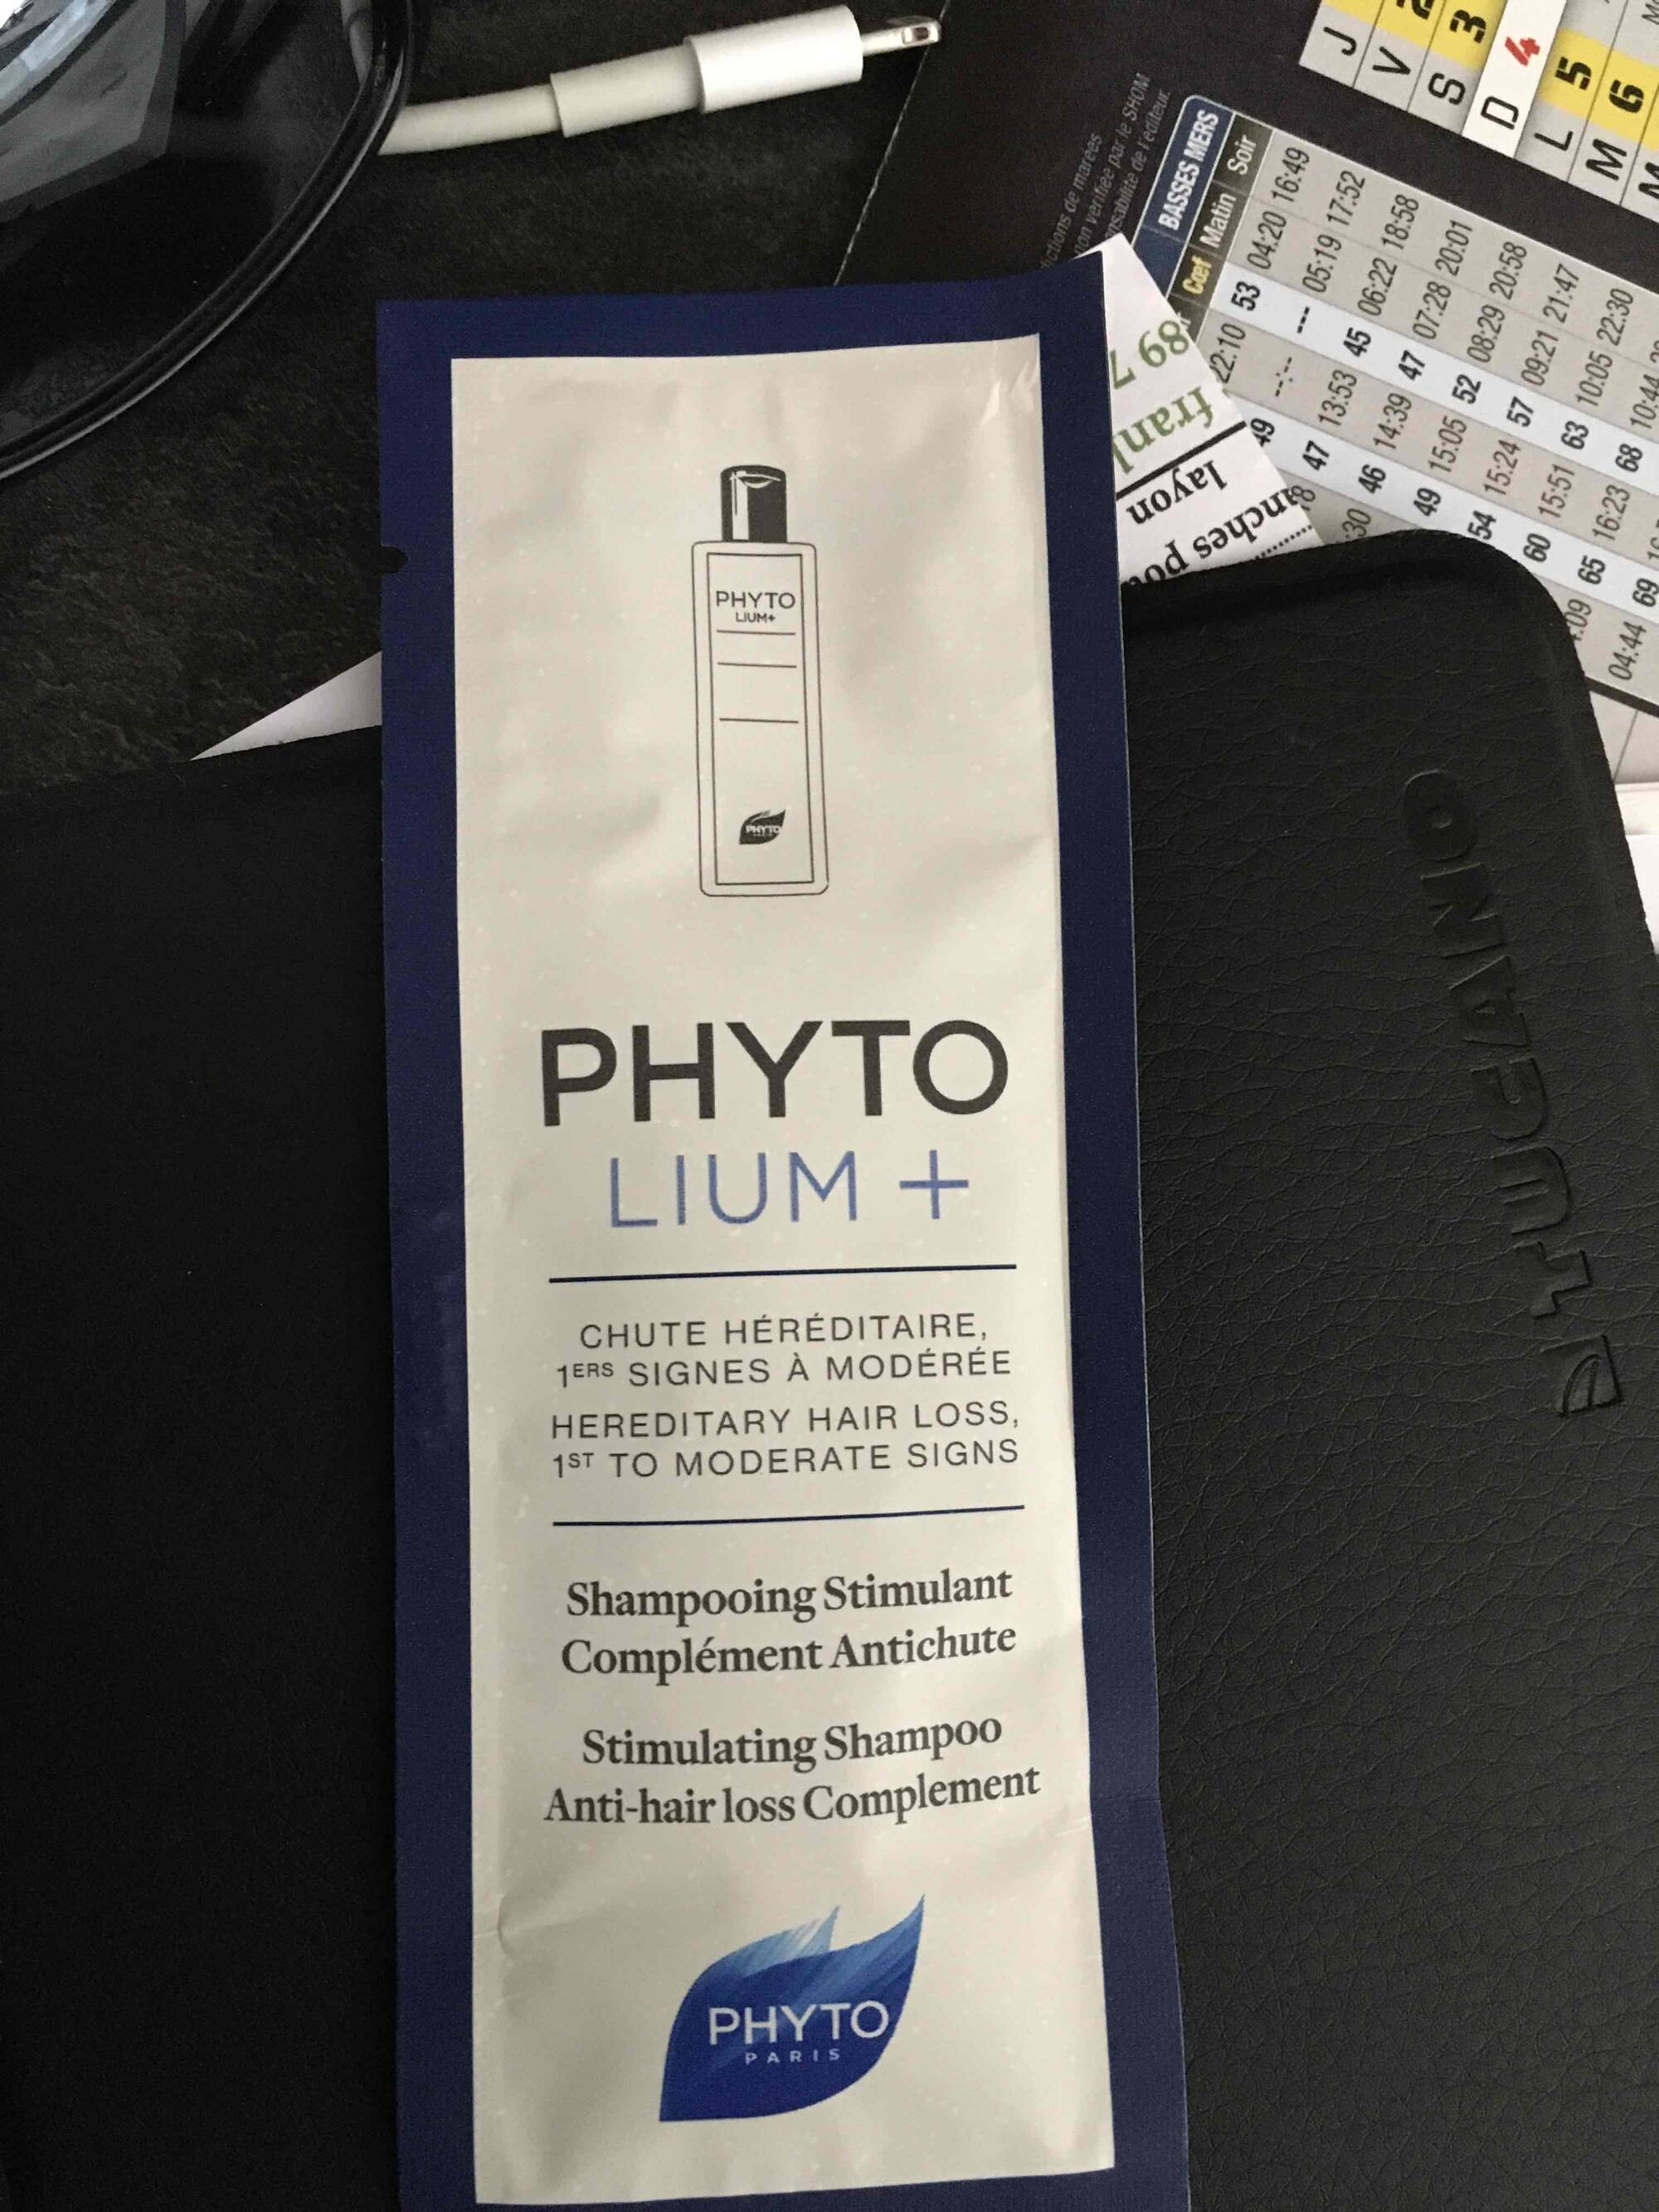 PHYTO PARIS - Phyto Lium+ - Shampooing stimulant complément Antichute